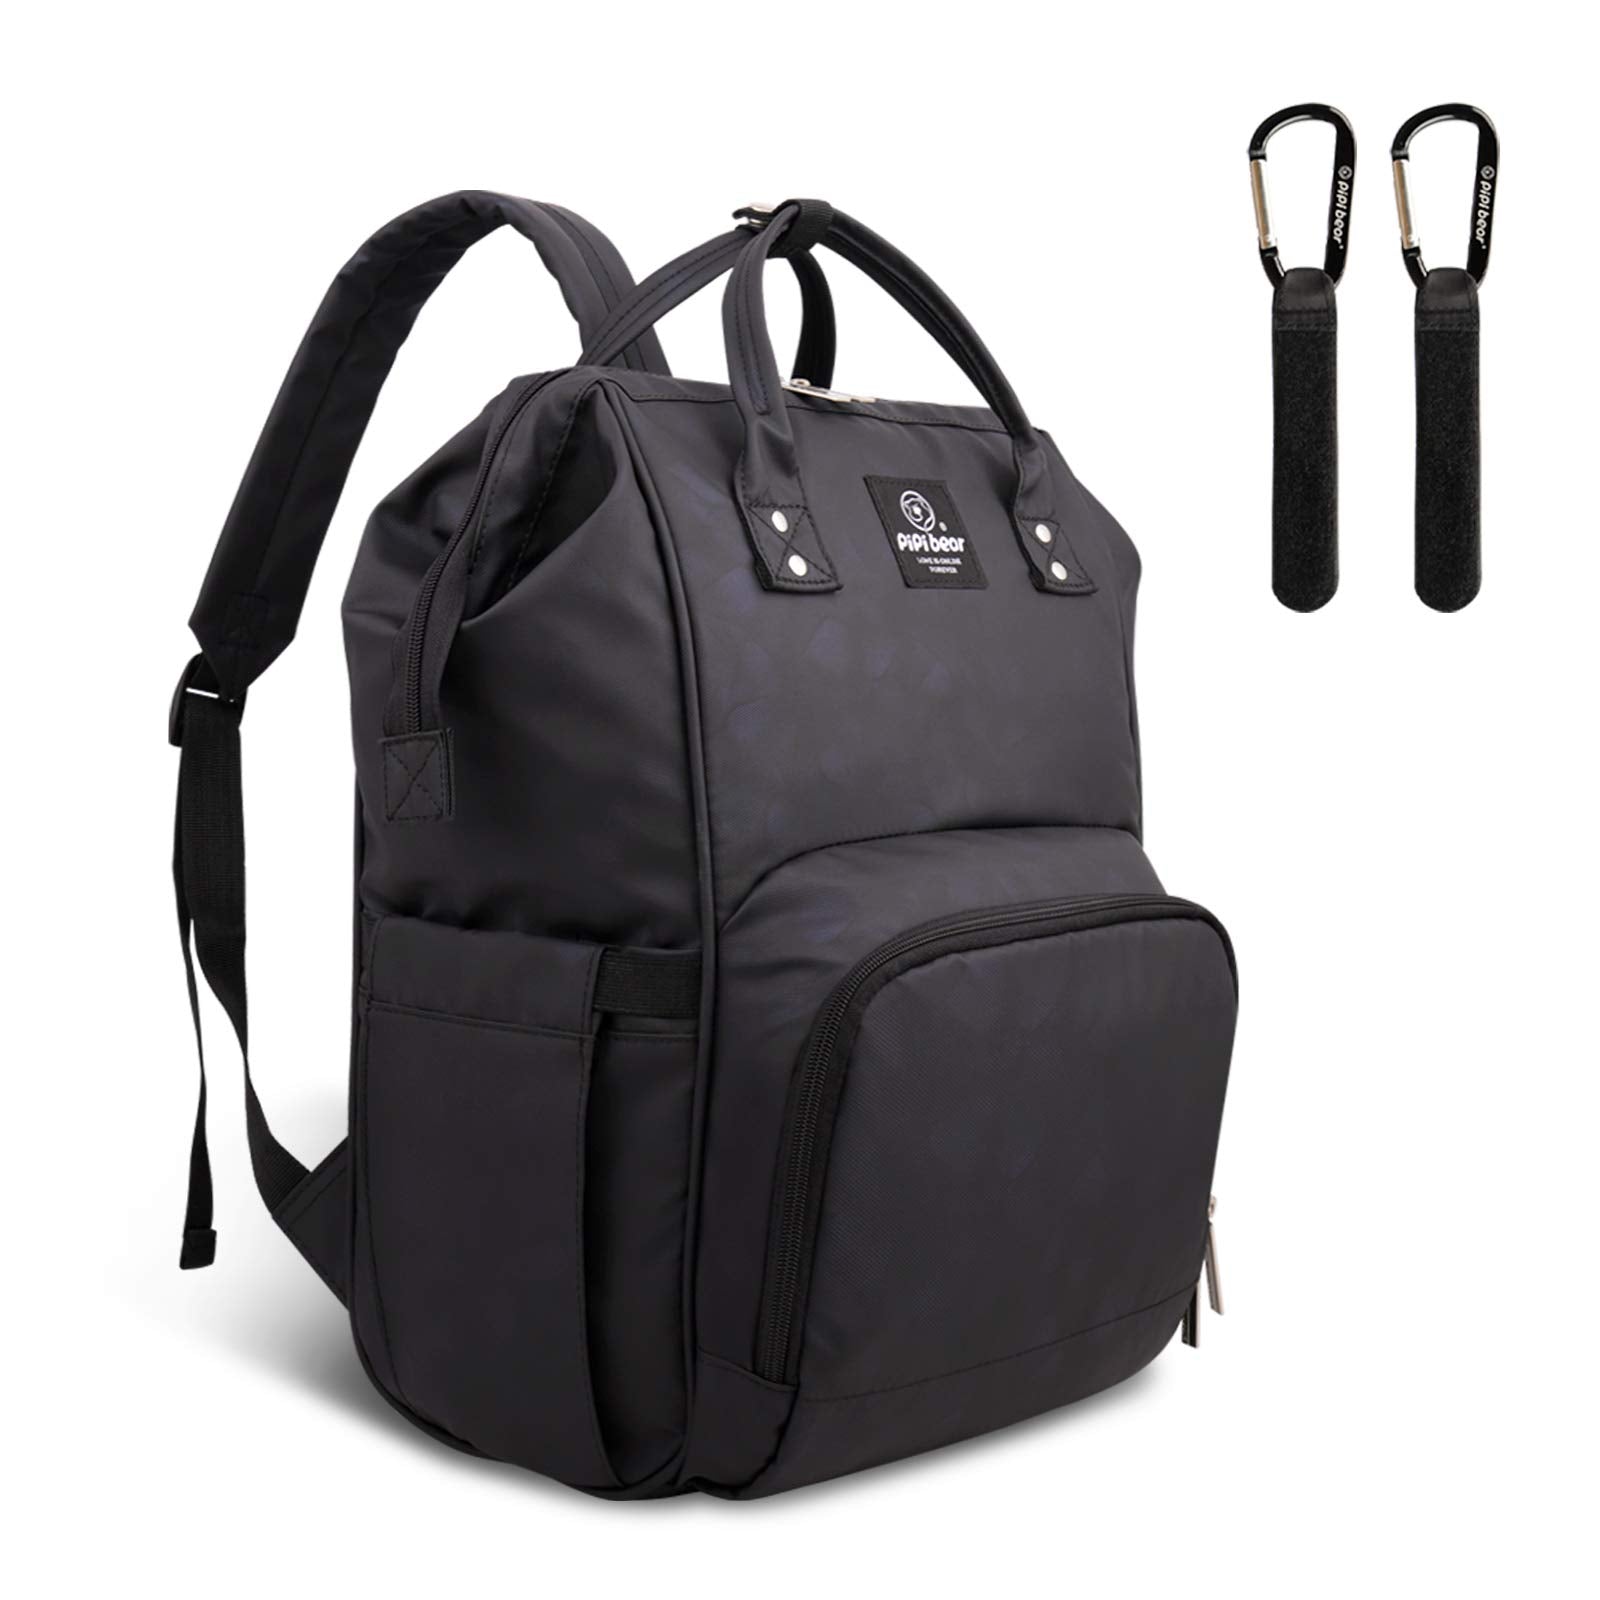 Pipi Bear Changing Backpack Bag Waterproof Baby Changing Bag Cool Nappy Backpack Organizer Large Capacity Diaper Tote Bag (Black)